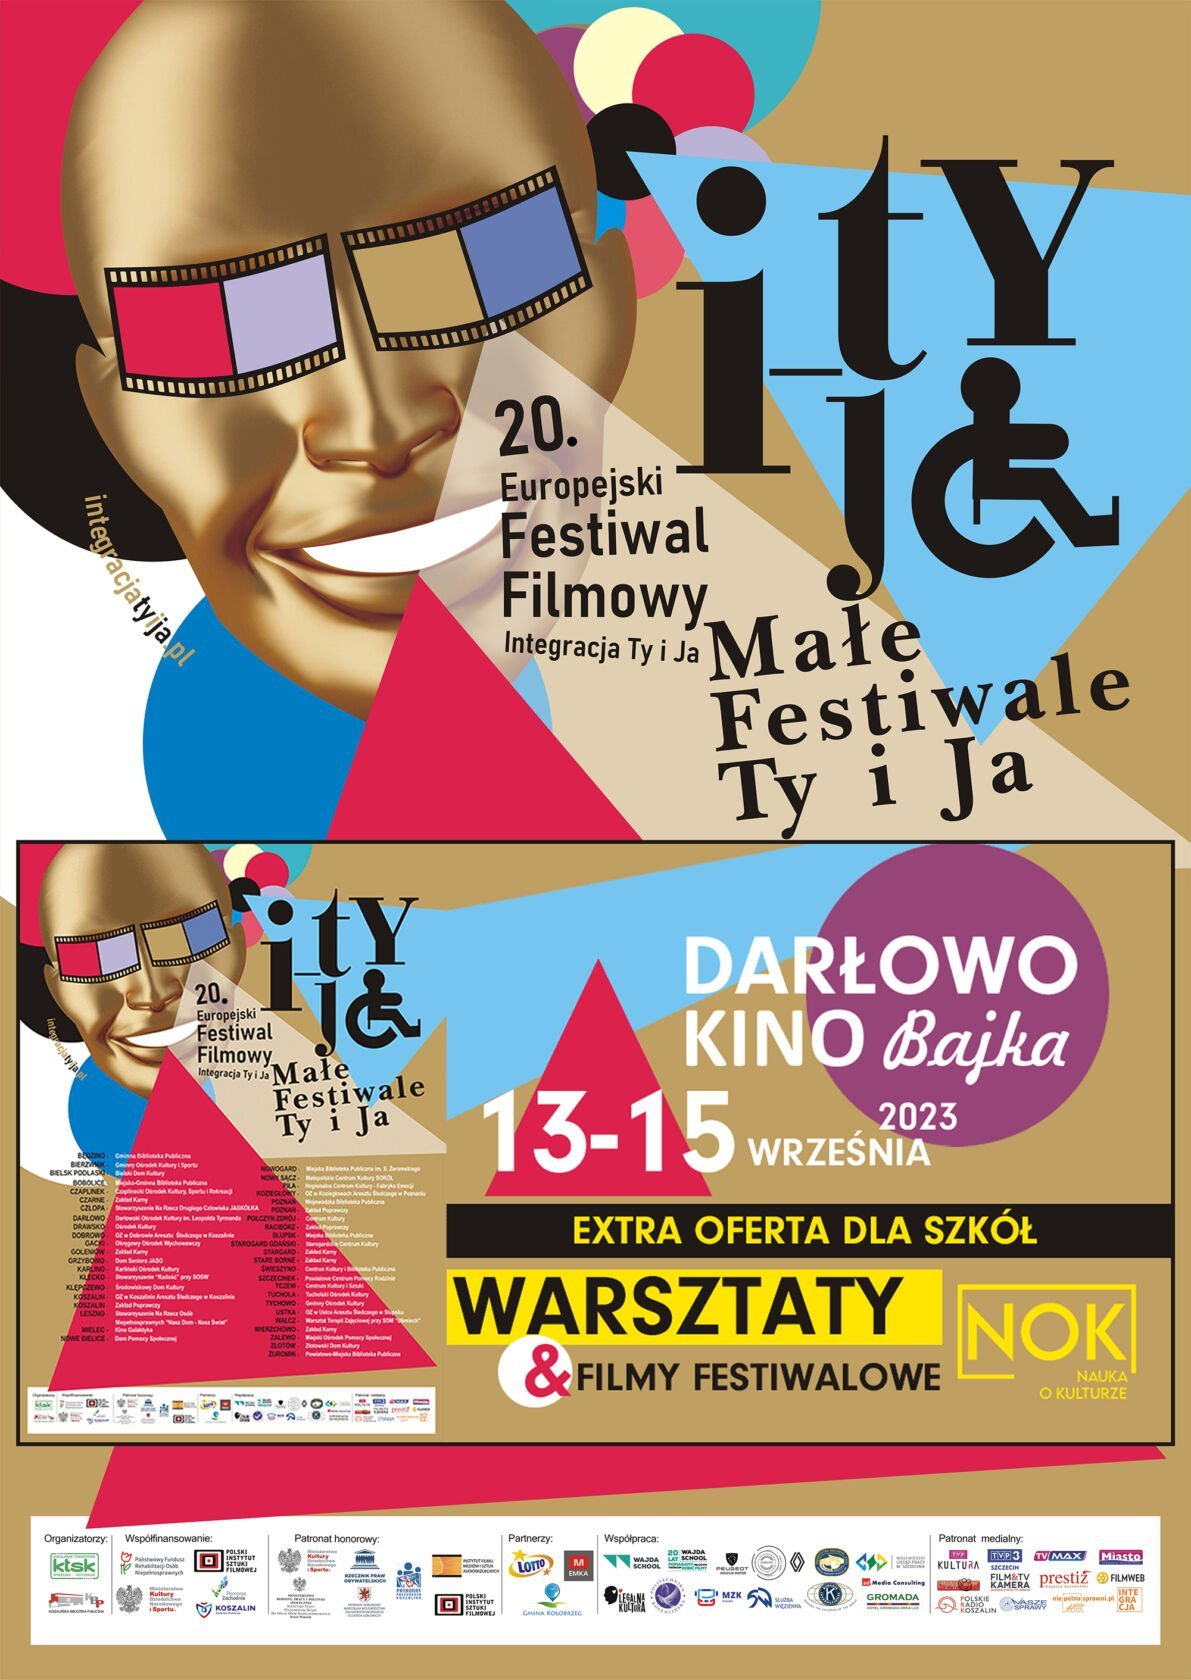 darłowo male festiwale a1 23